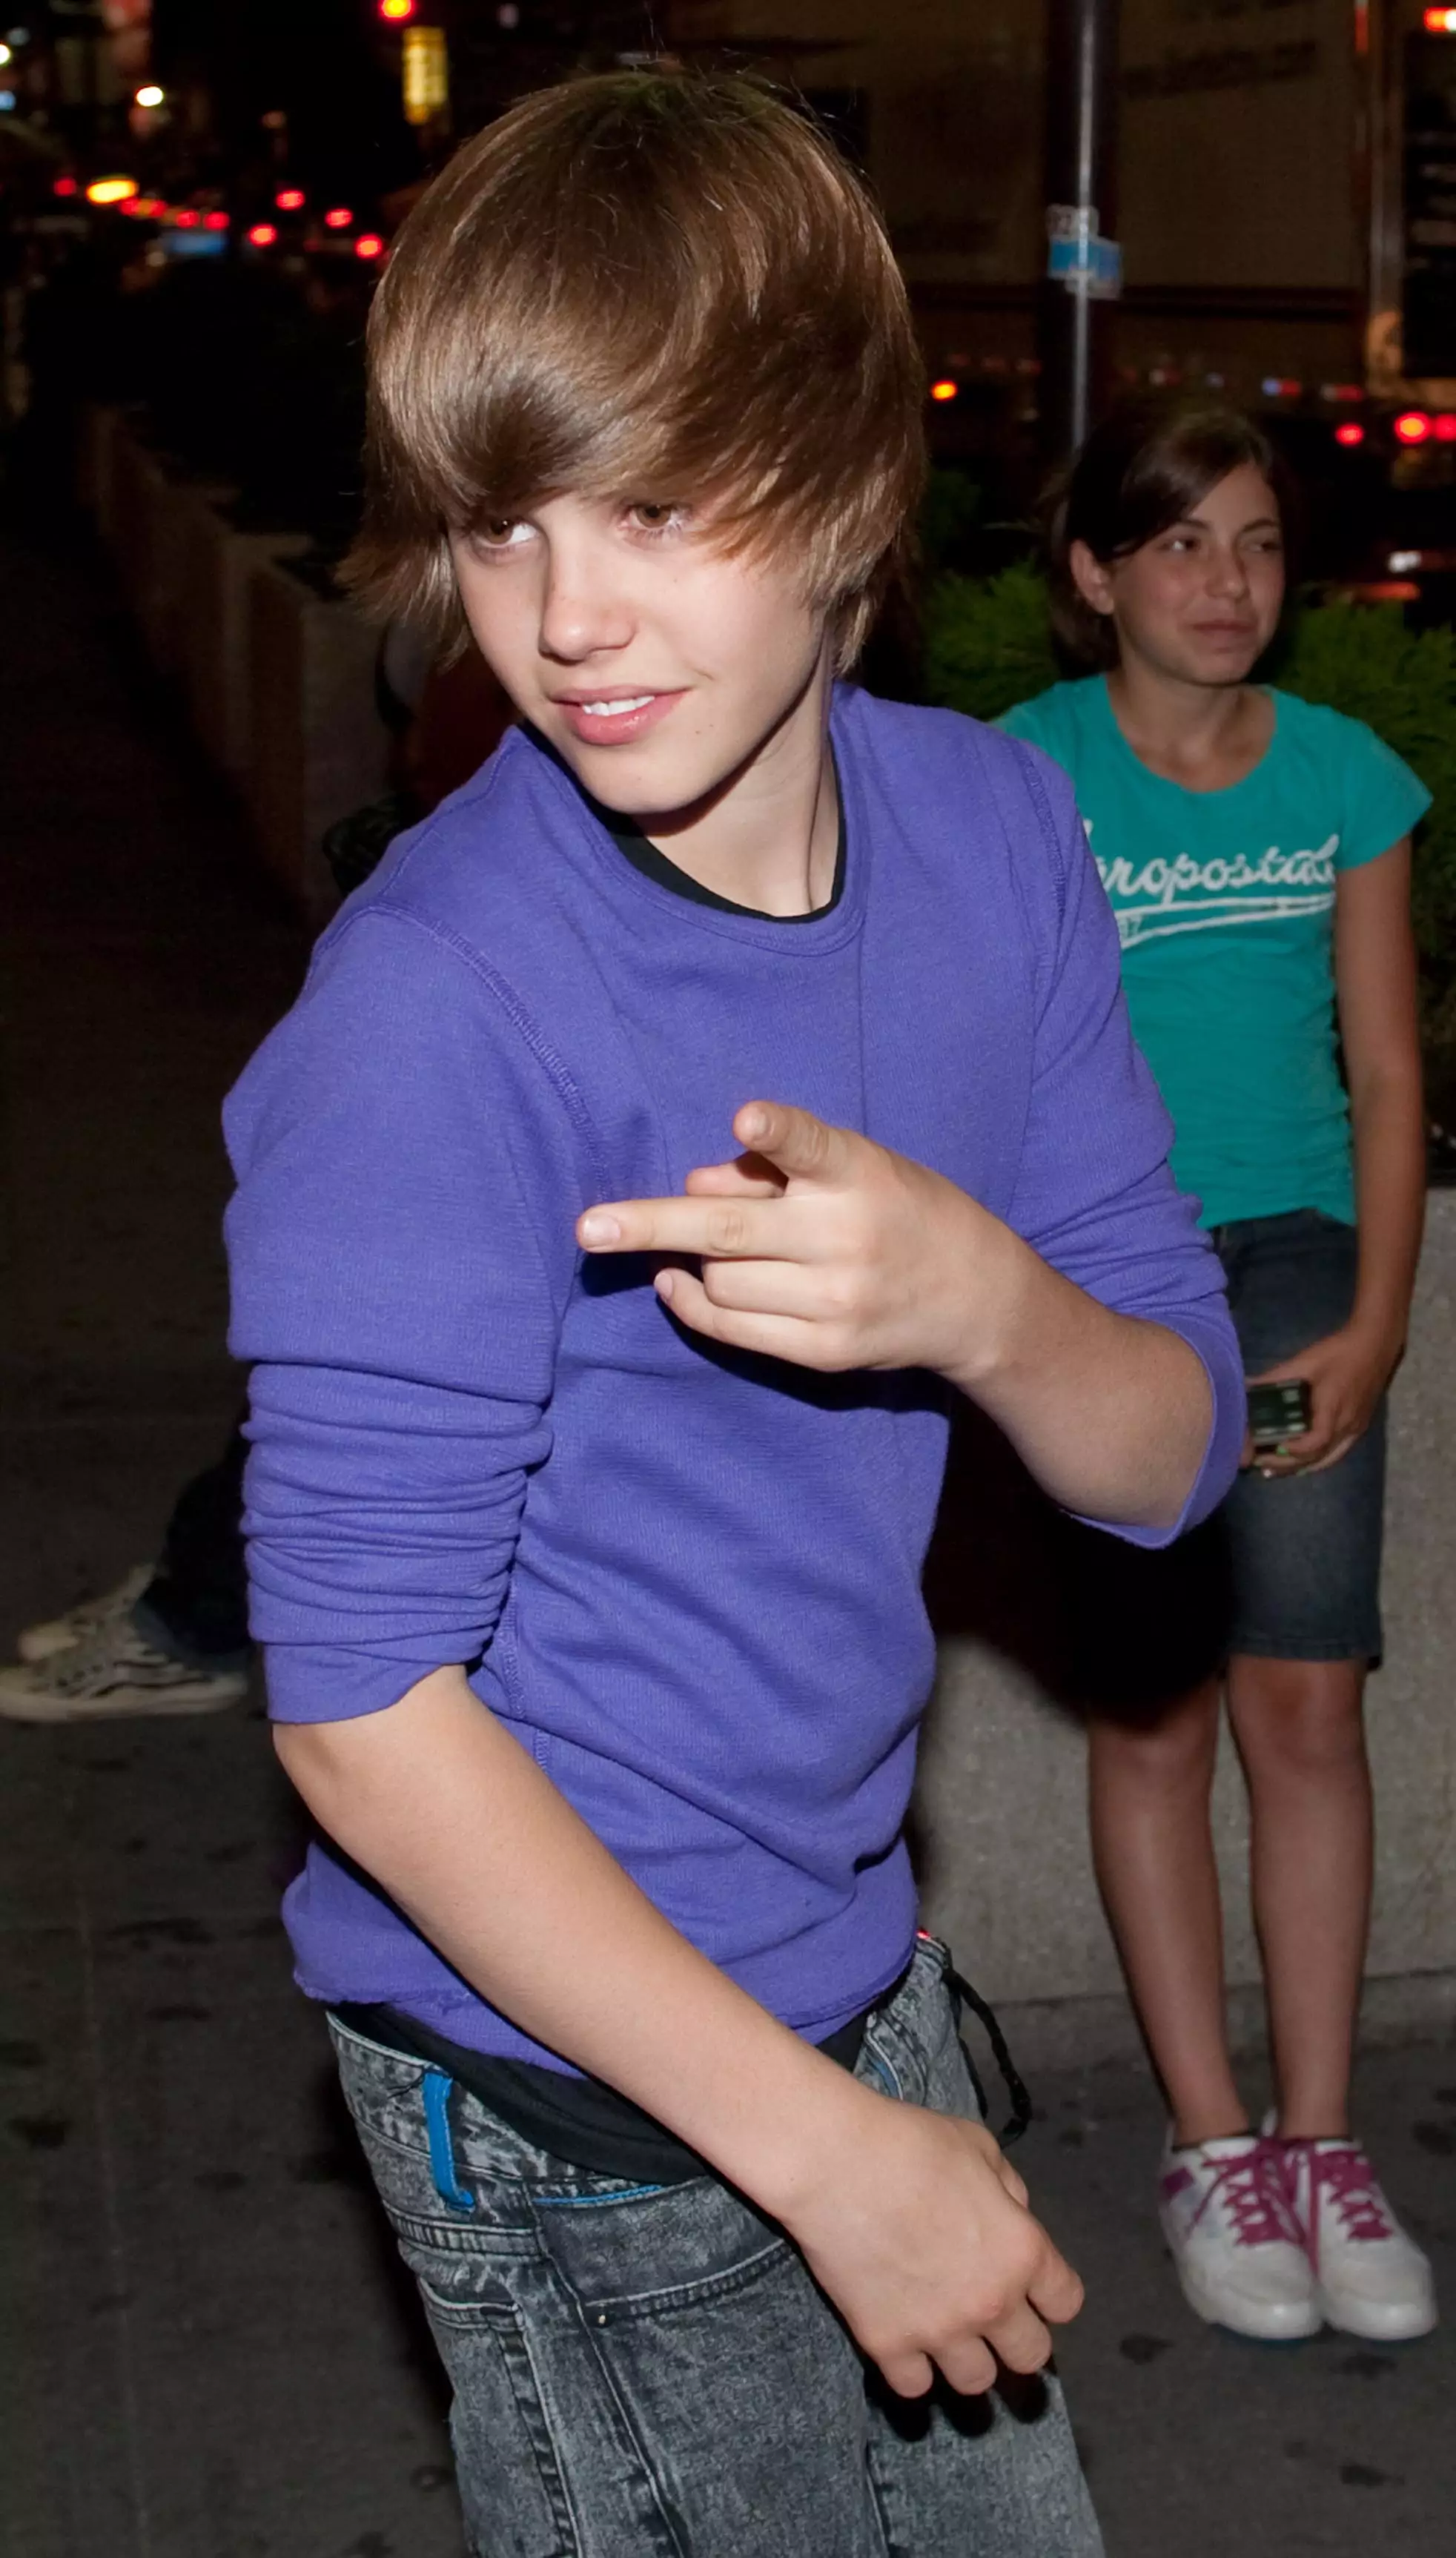 Bieber before bleach and tattoo guns came near him back in 2009.